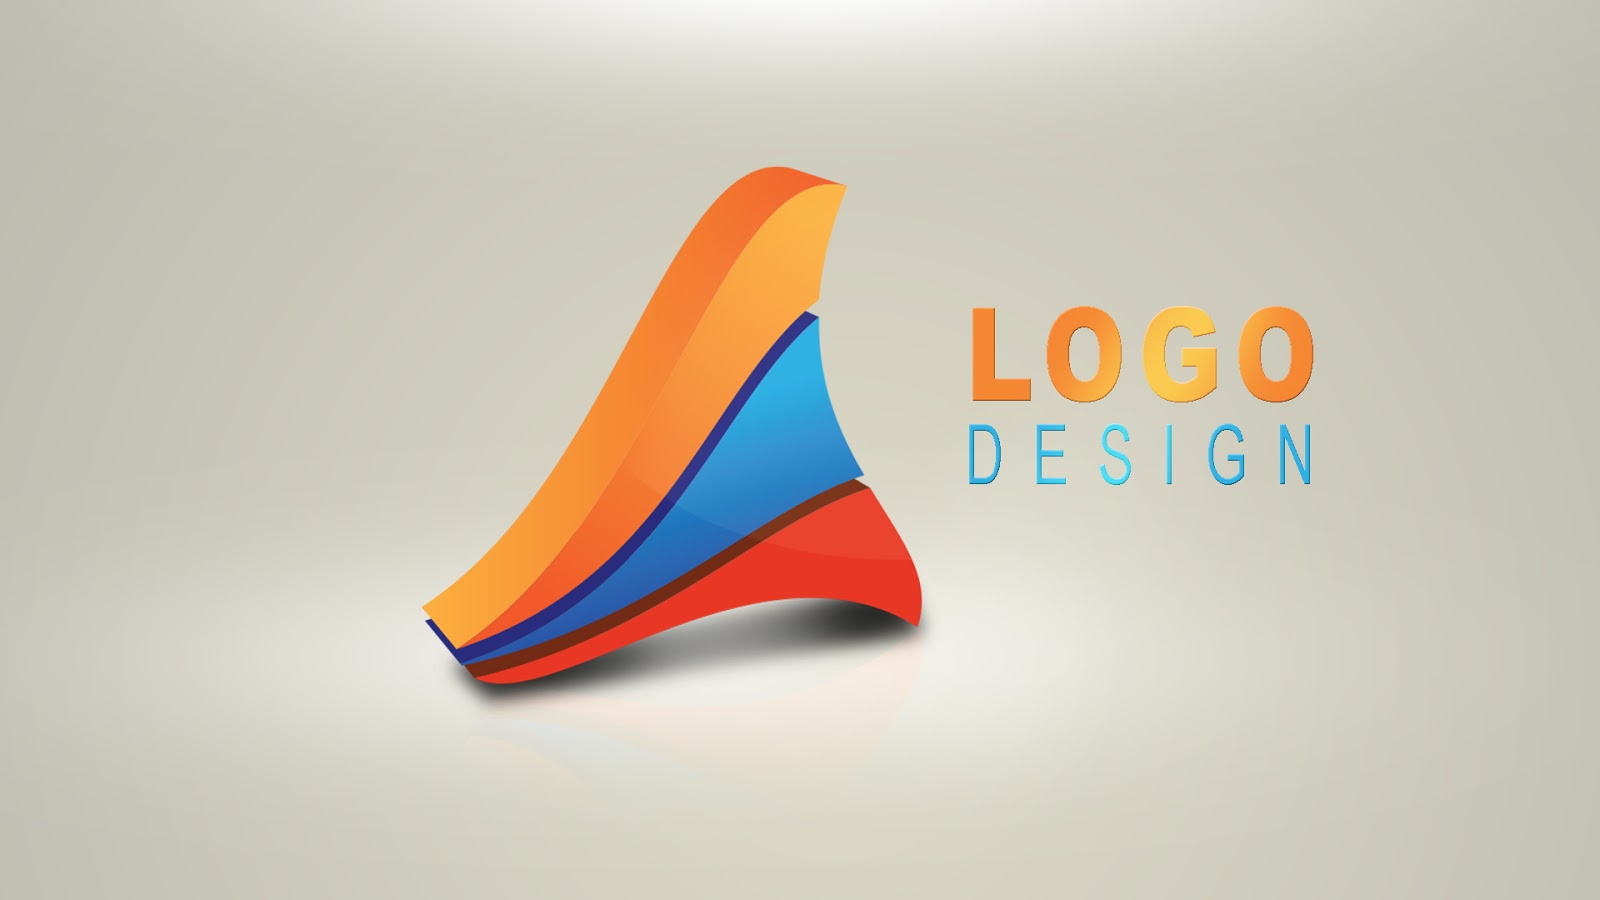 3d Logo Design Illustrator Photoshop Tutorial In Hindi 